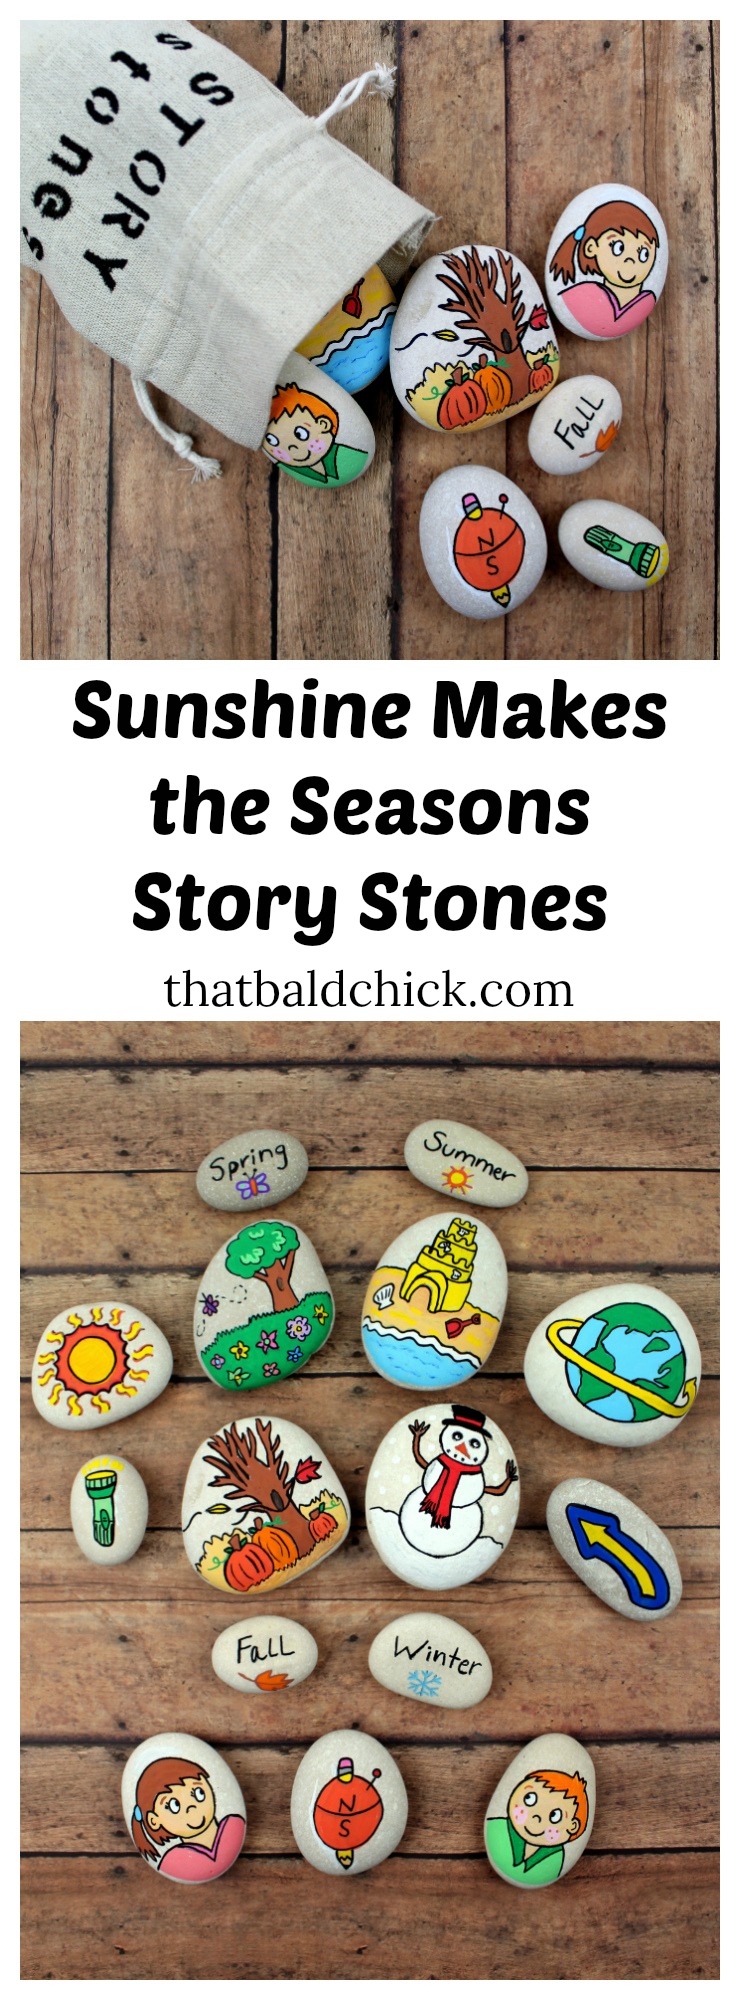 Sunshine Makes the Seasons Story Stones at thatbaldchick.com